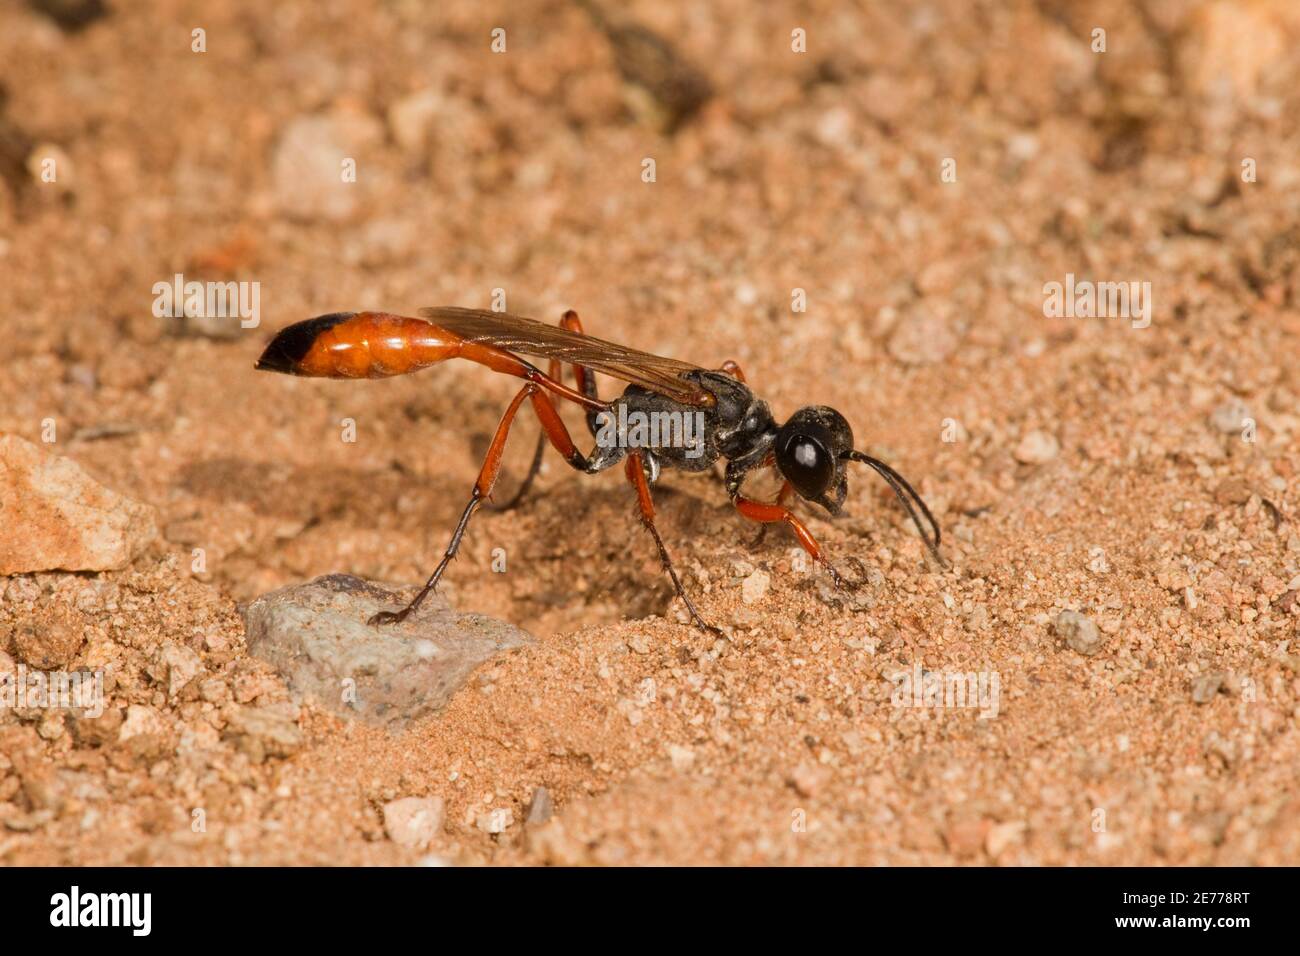 Thread-waisted Wasp female, Ammophila femurrubra, Sphecidae. Digging nesting burrow. Stock Photo